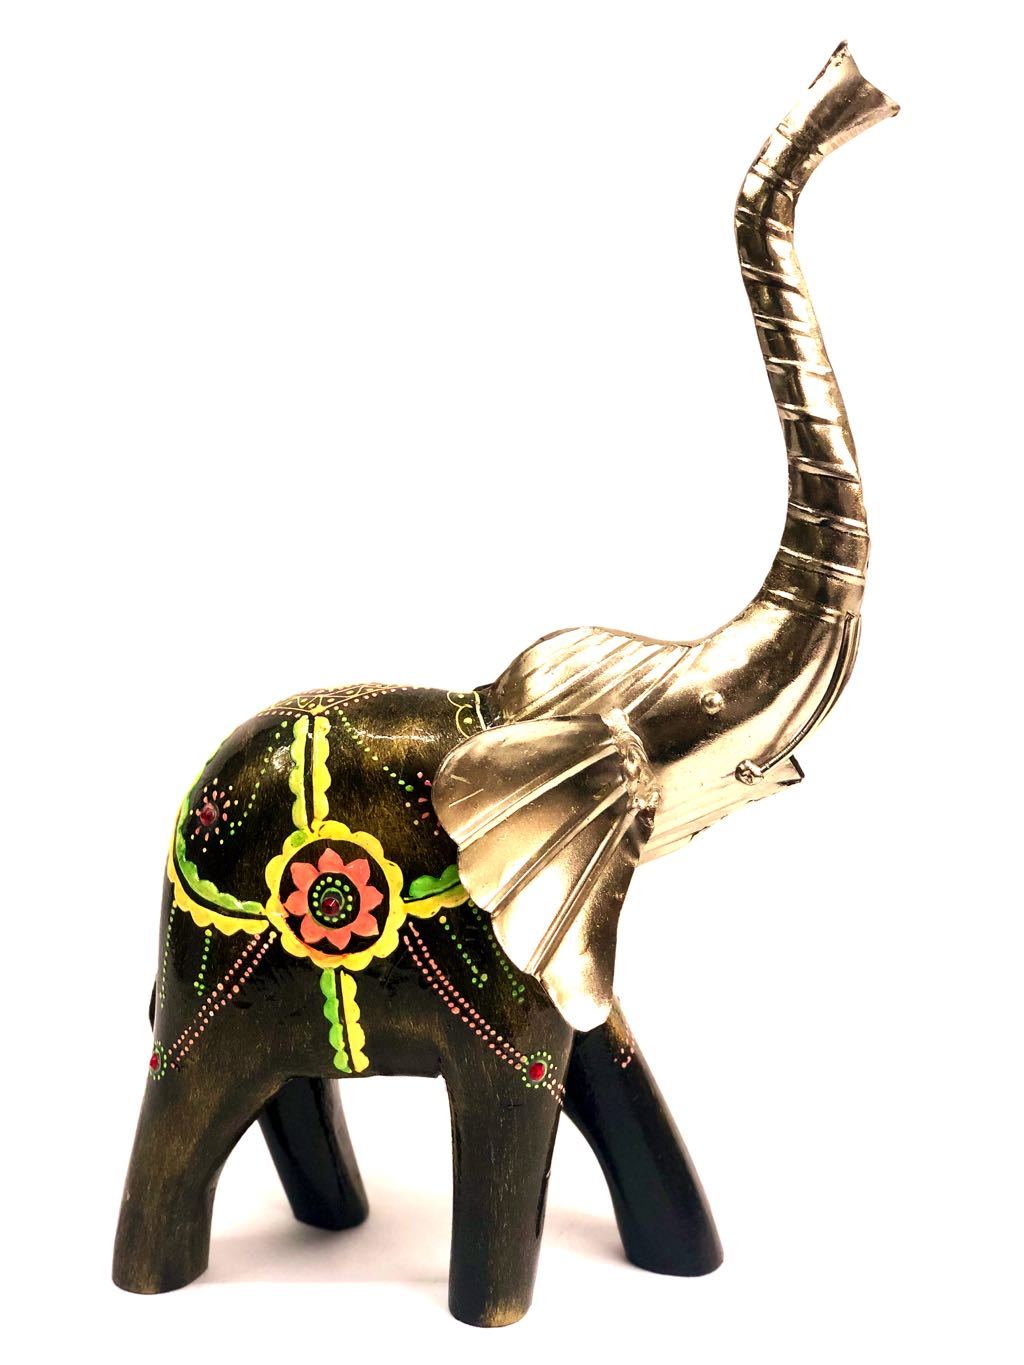 HandPainted With Vibrant Colors Elephant Indian Decor Ideas Tamrapatra - Tanariri Hastakala